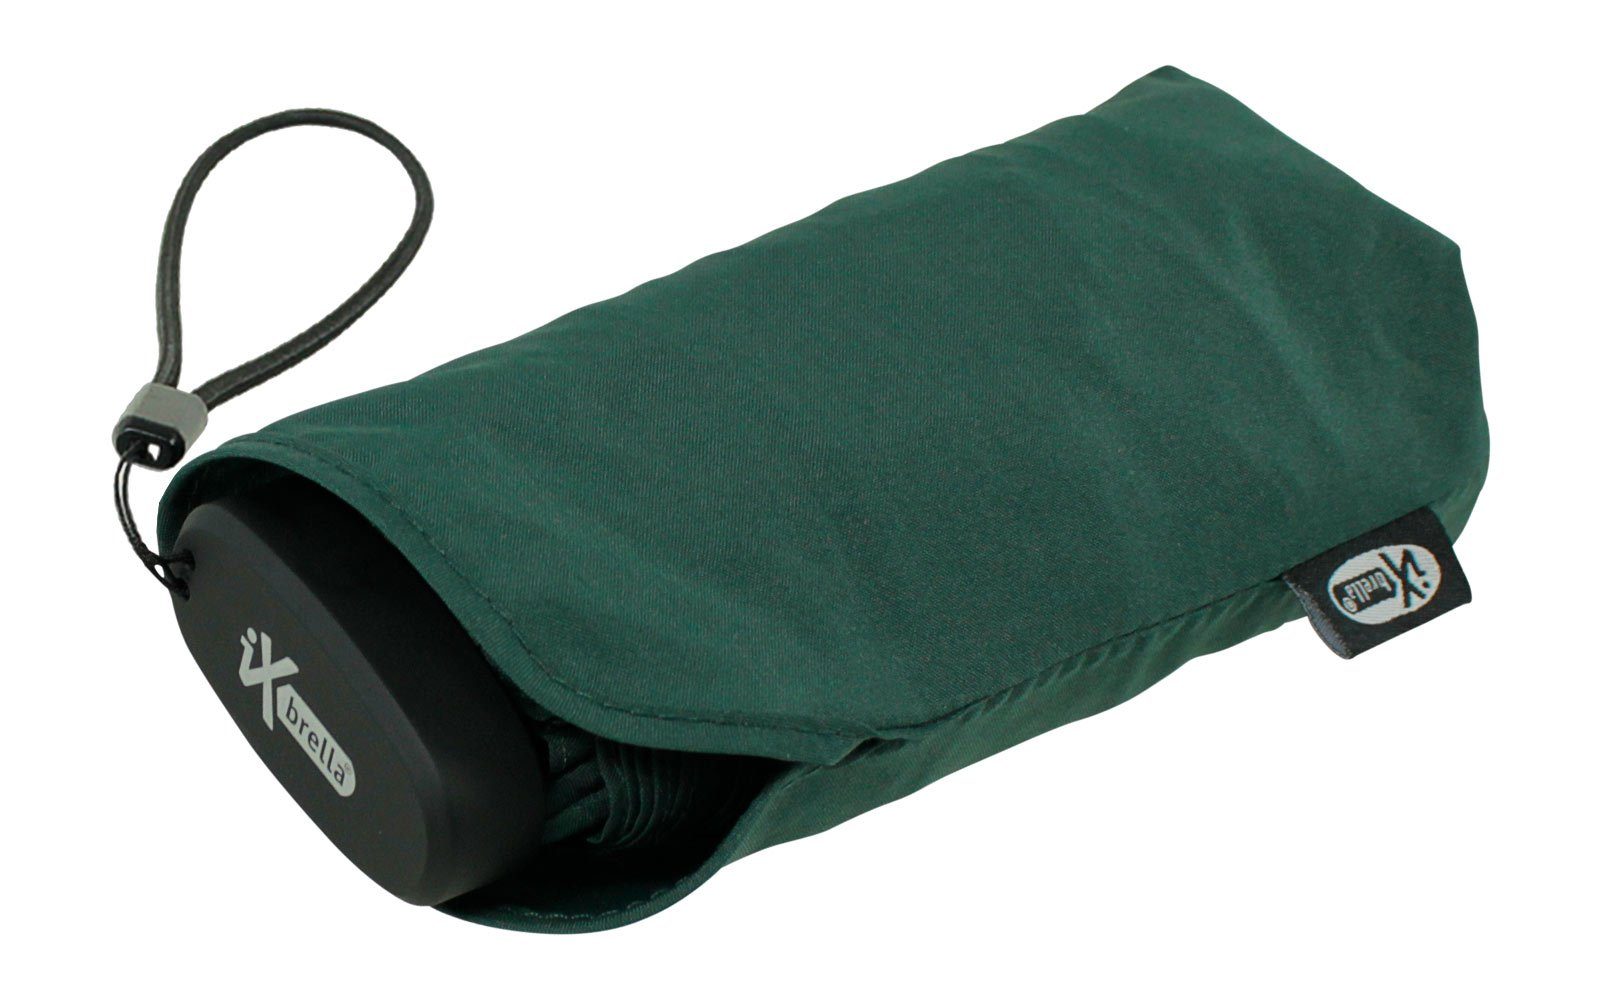 dunkelgrün 15 Schirm im cm Taschenregenschirm Format, Mini winziger Ultra ultra-klein Handy iX-brella